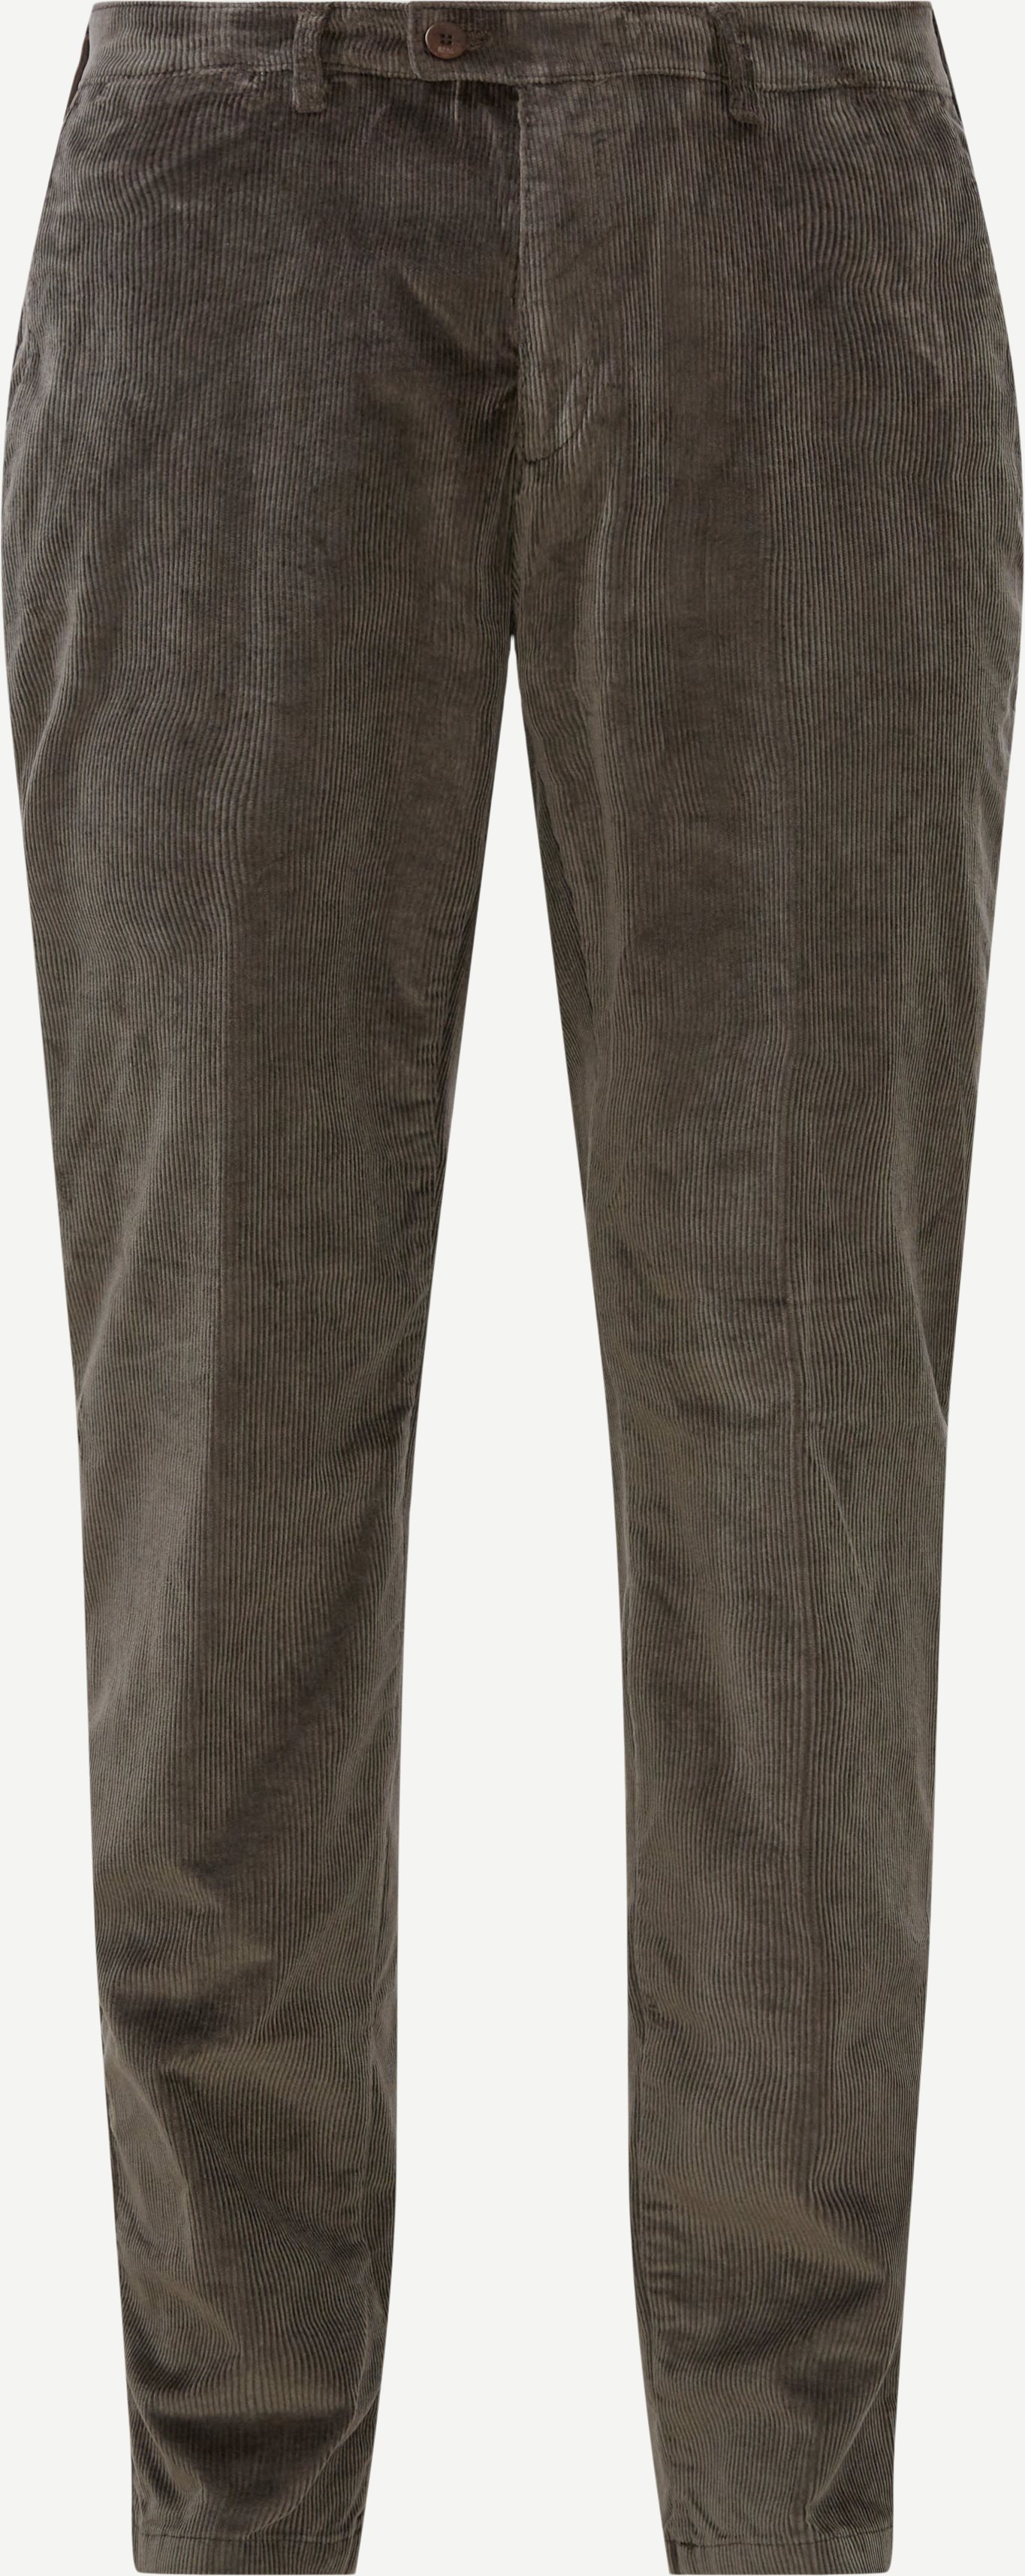 Brax Trousers 89-3234 FELIX Brown